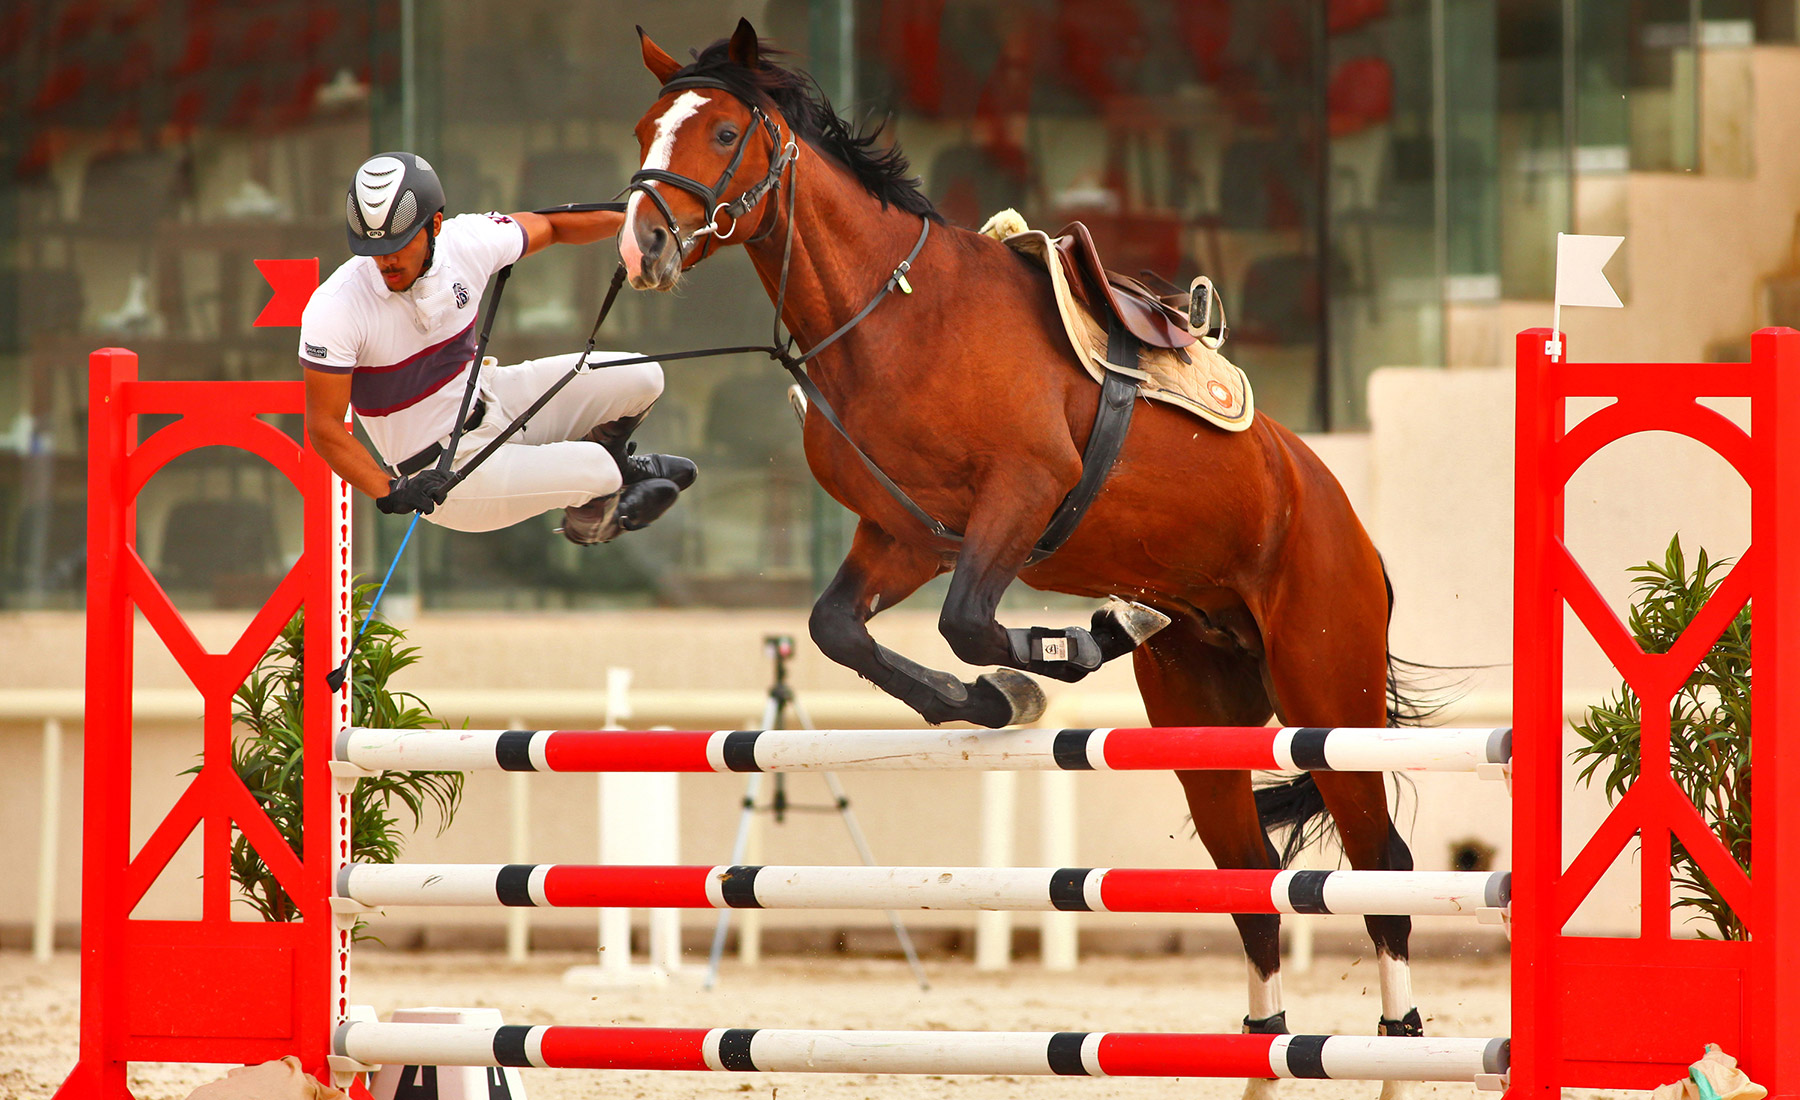 By Maitham Al Misry, "Horse jump" (Kuwait)